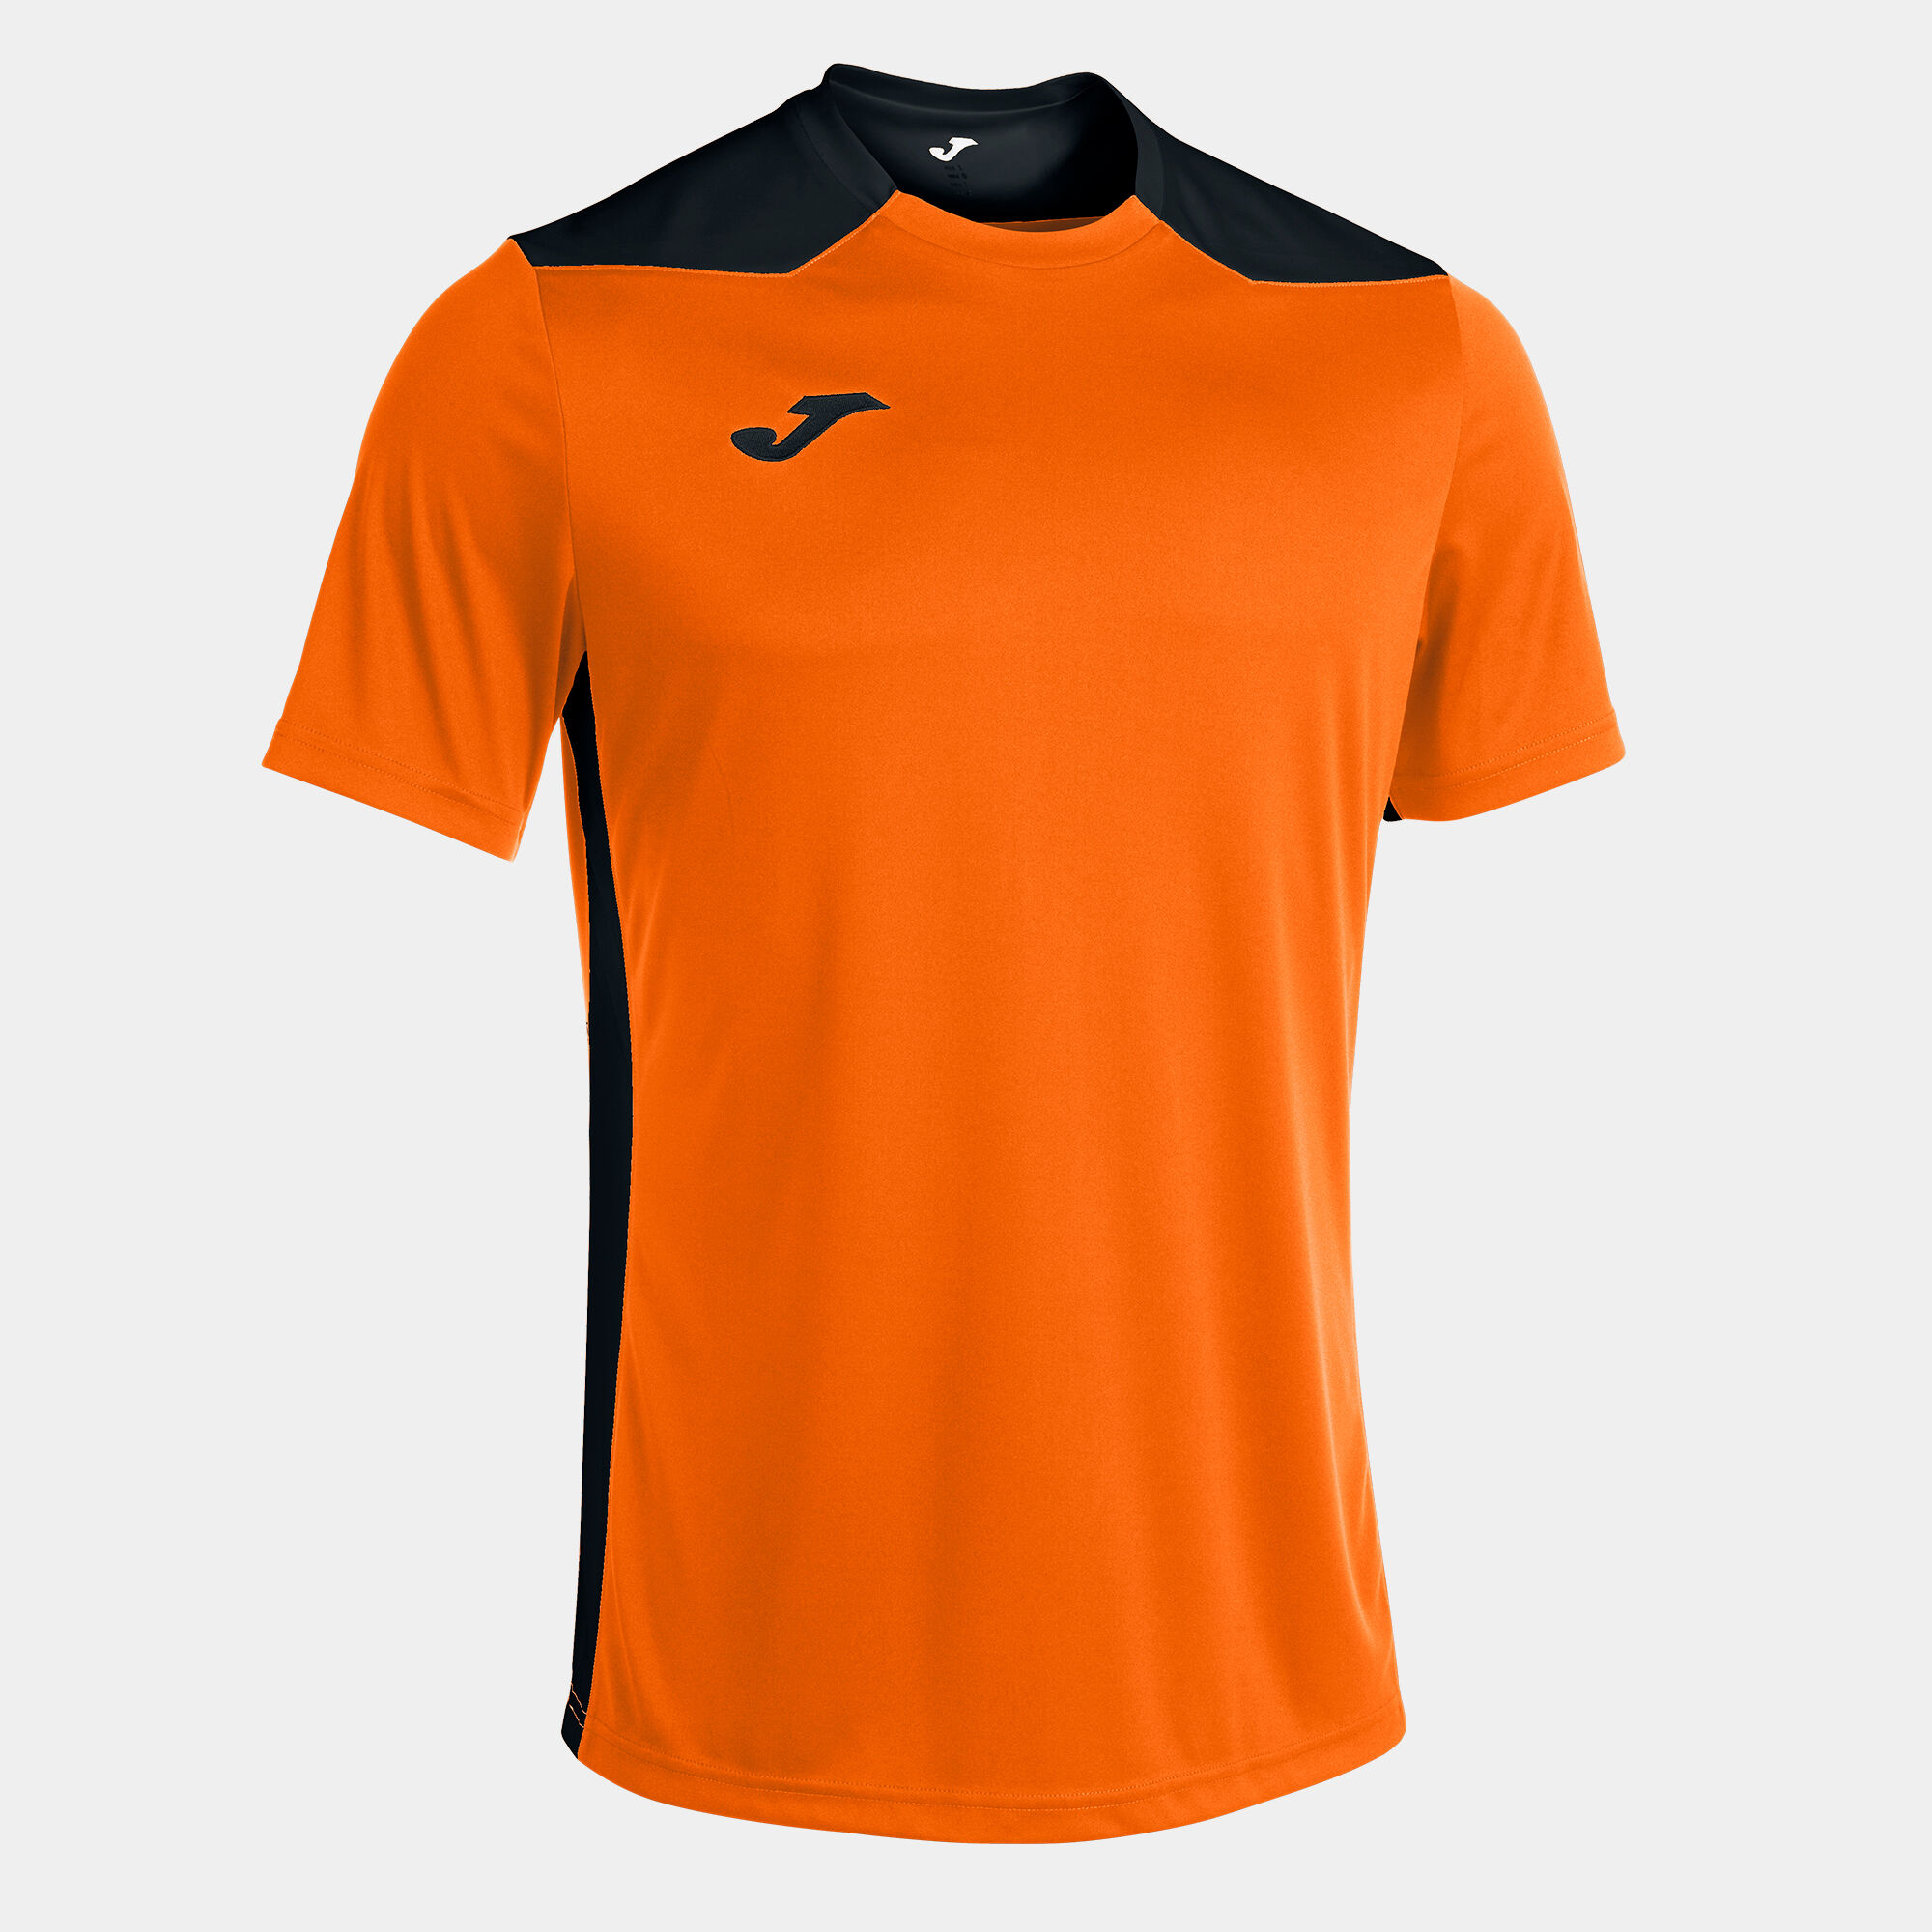 T-shirt manga curta homem Championship VI laranja preto